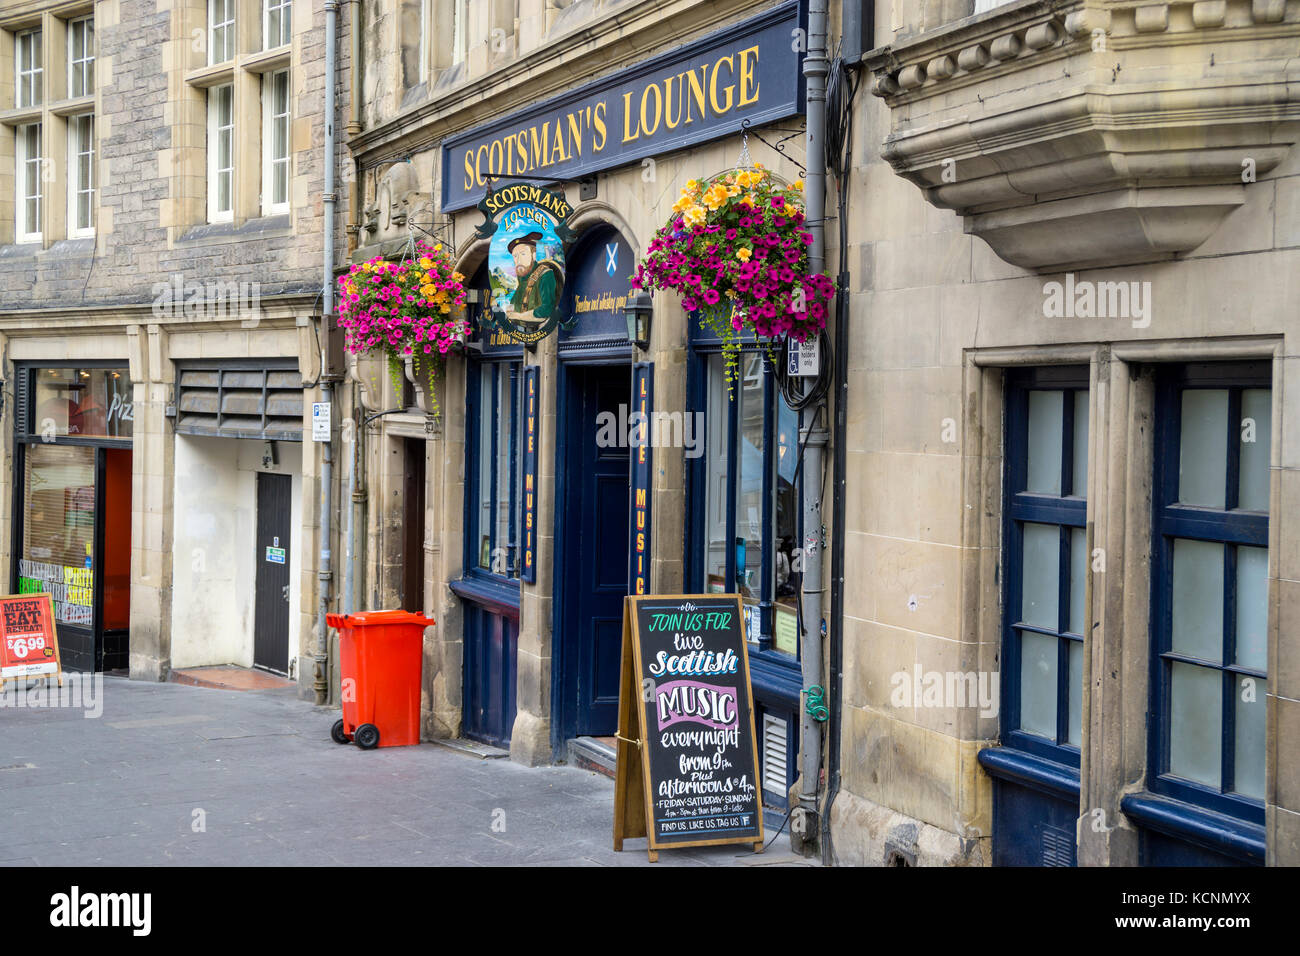 Scotsman's Lounge, a pub just off the Royal Mile, Edinburgh, Scotland Stock Photo